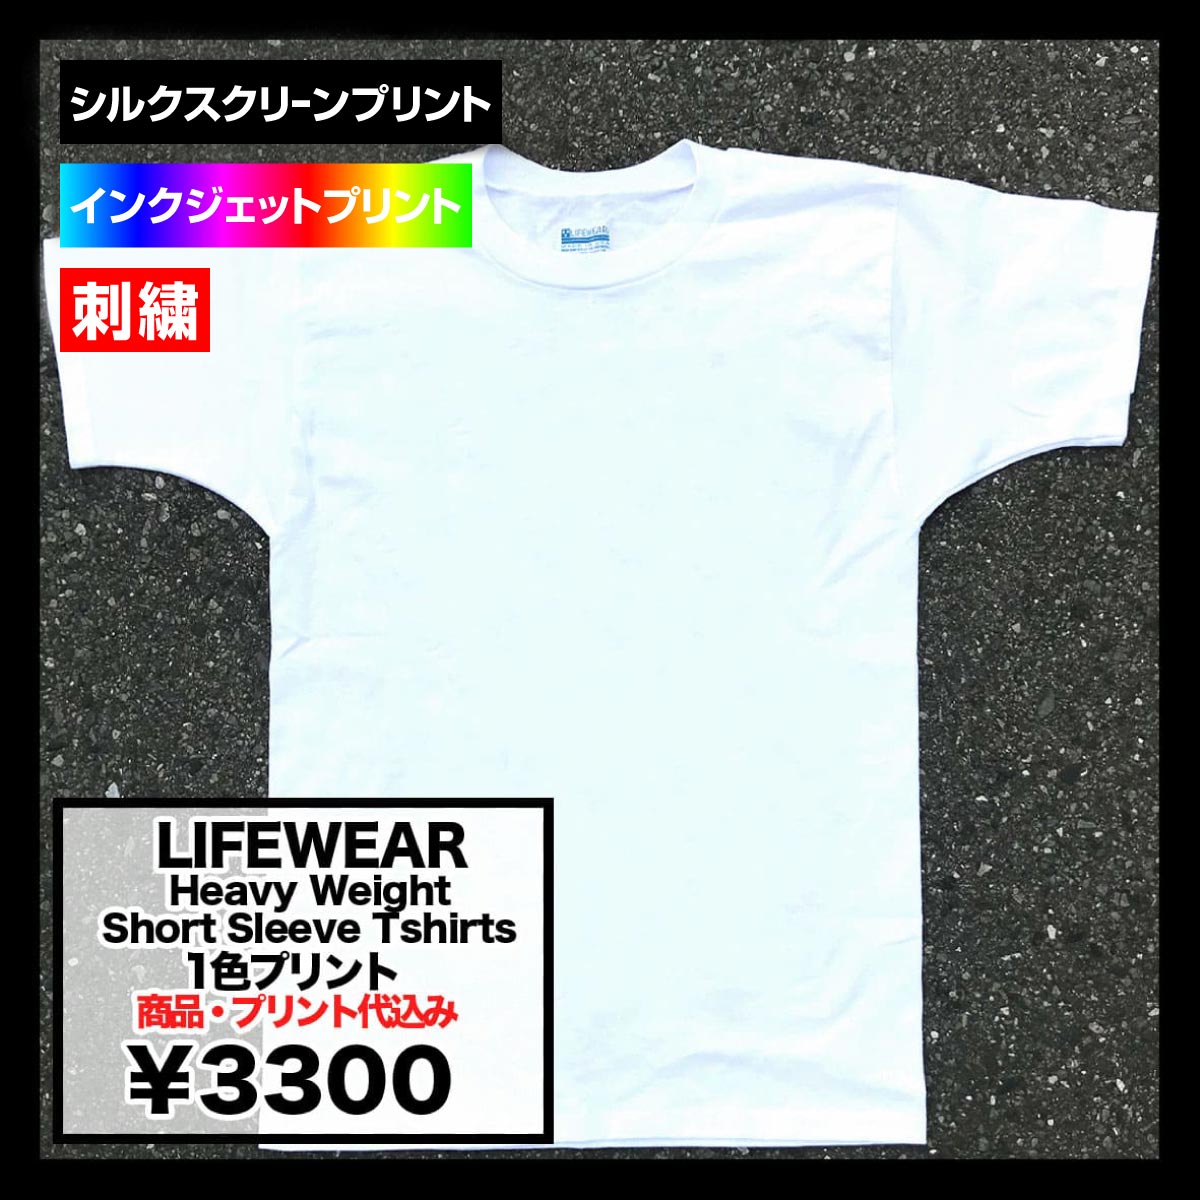 LIFEWEAR ライフウェア 7.0oz Heavy Weight Short Sleeve Tshirts (品番7407)